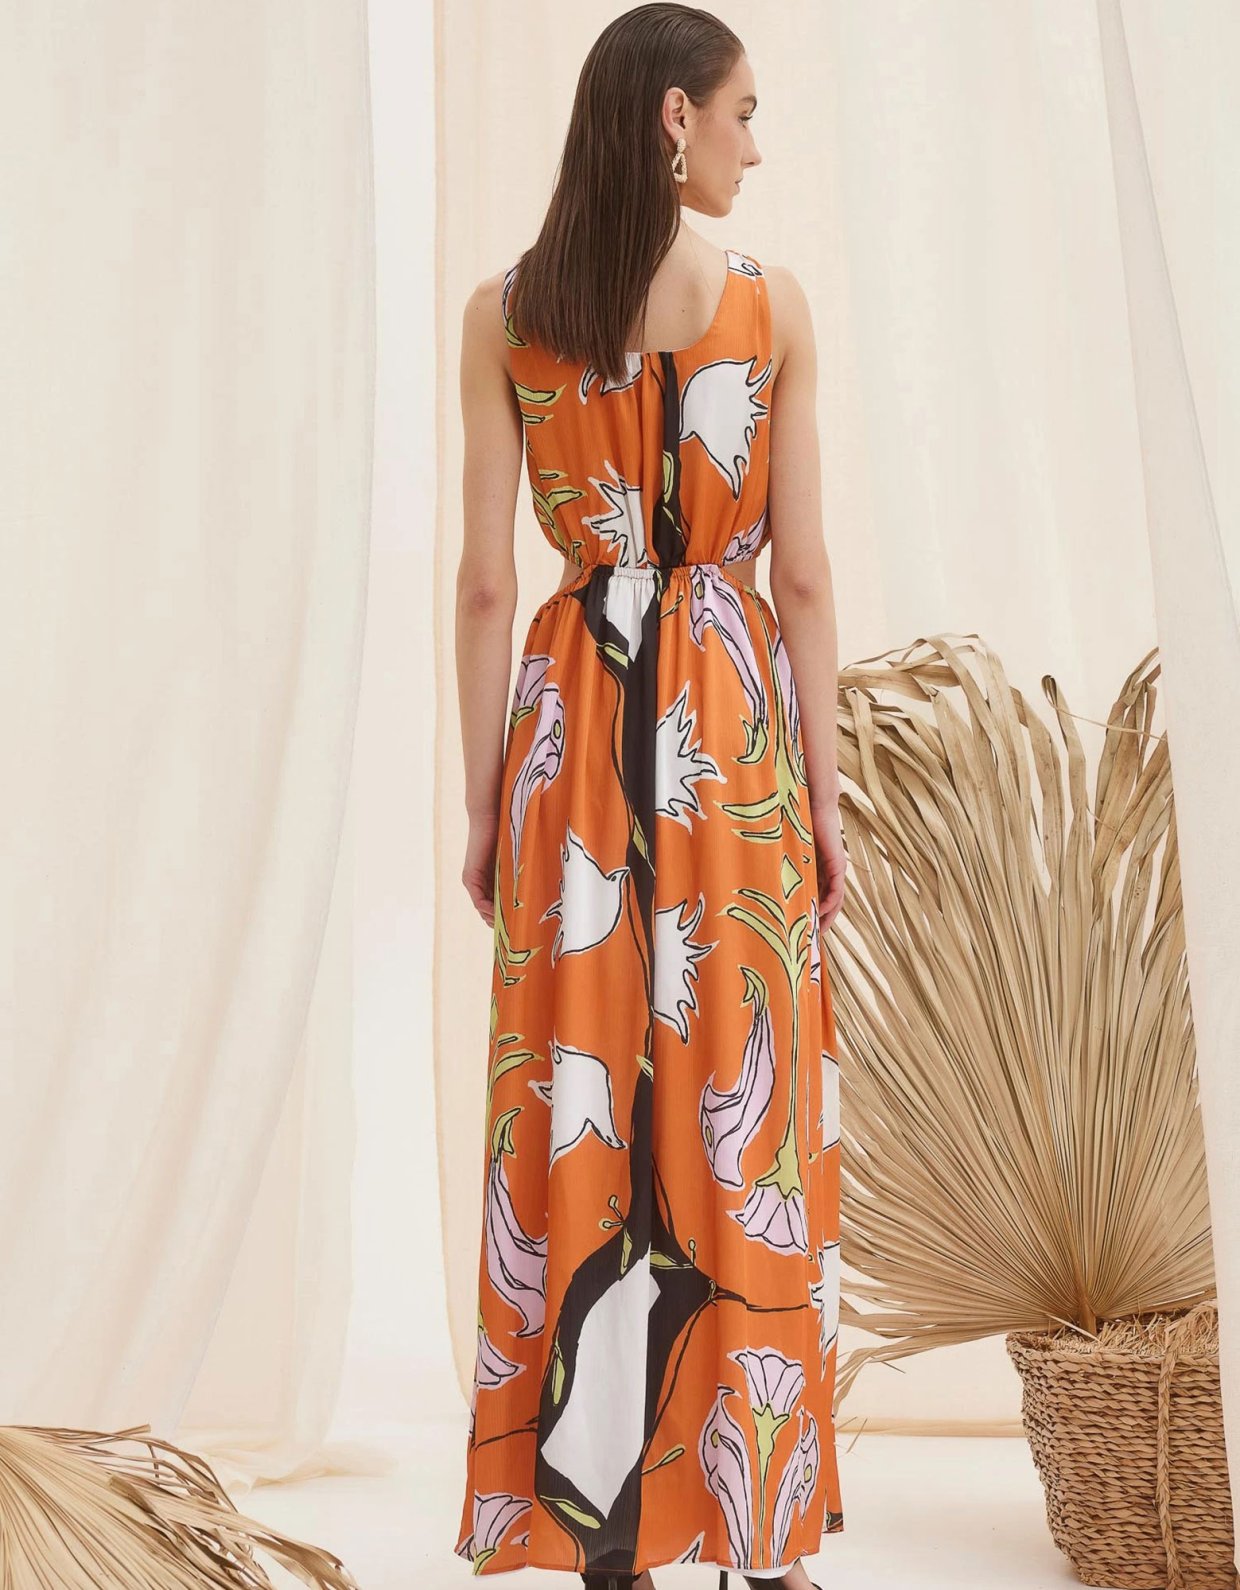 The Knl's Evadne lily print dress